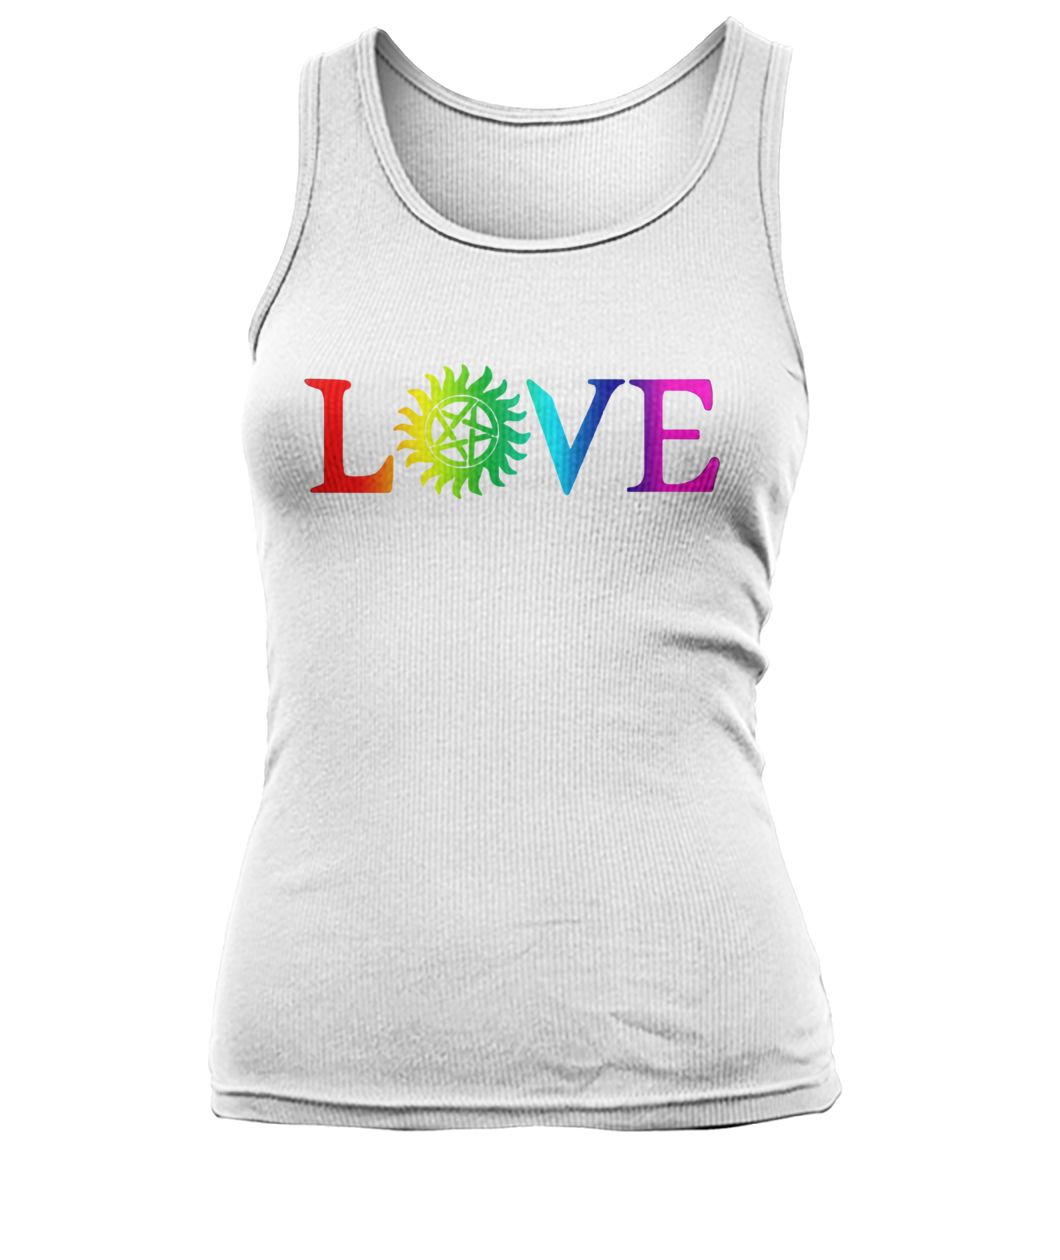 Love pride gay LGBT women's tank top